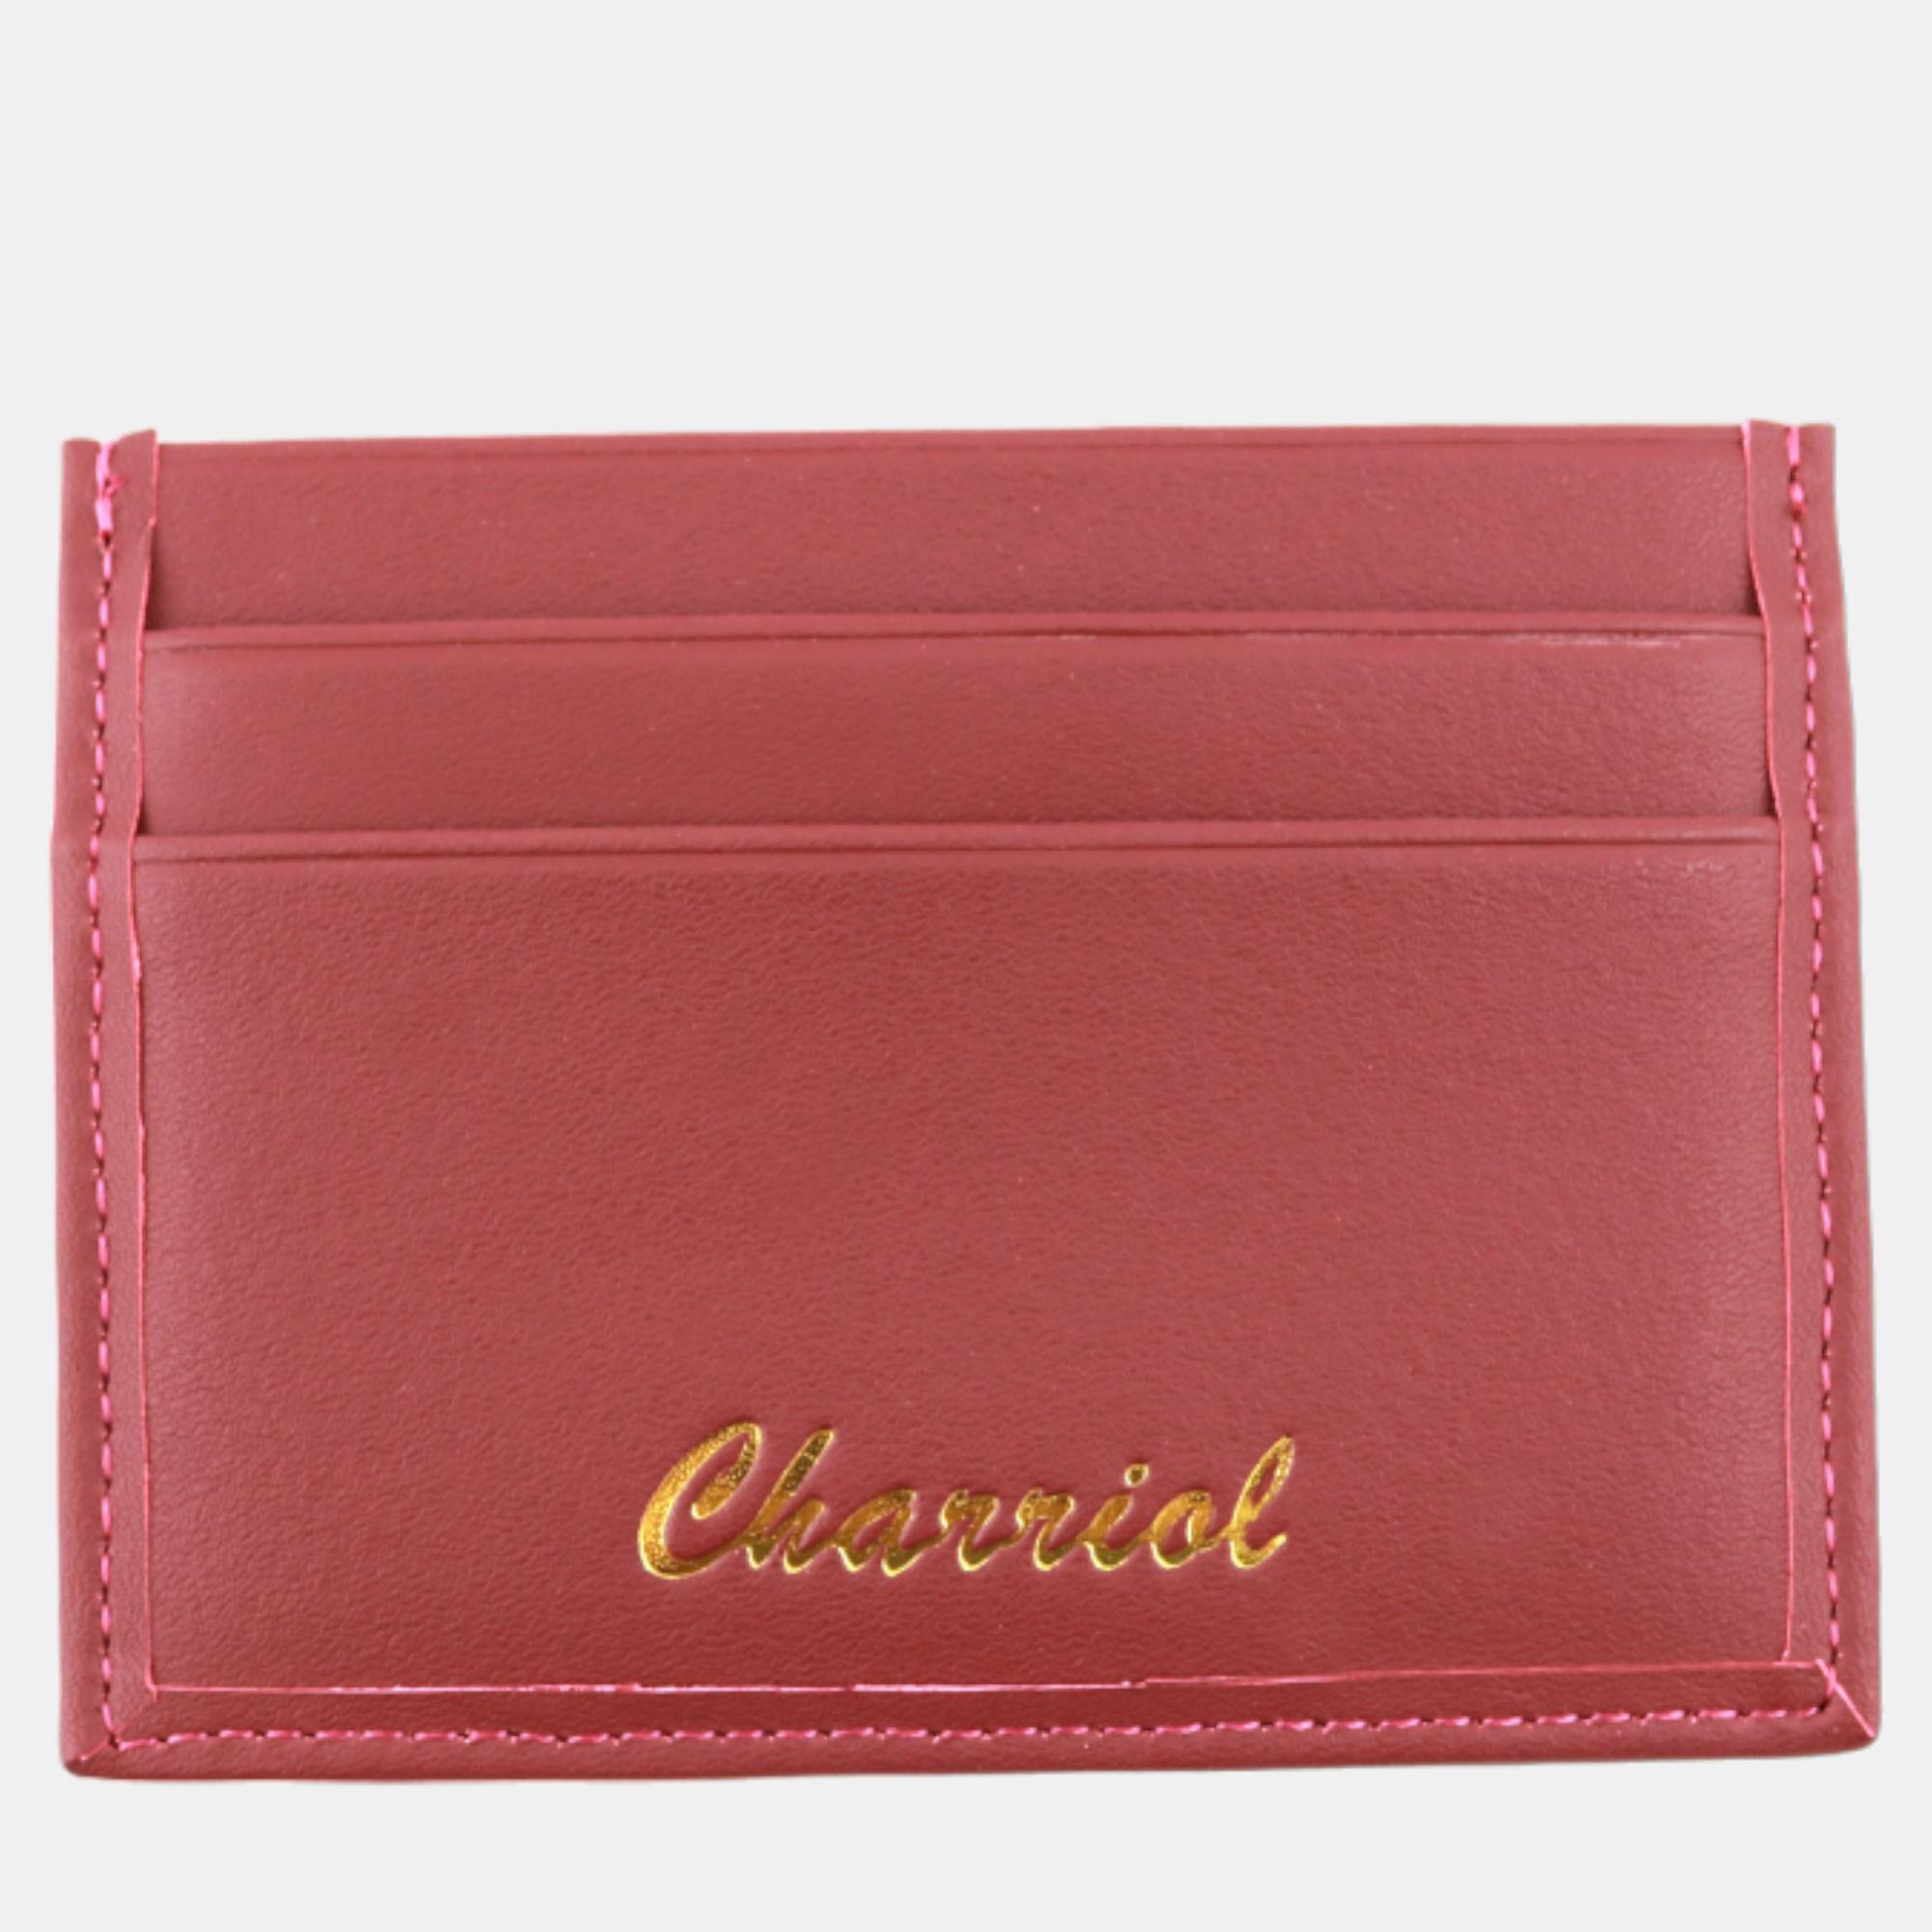 Charriol  leather christina card holders